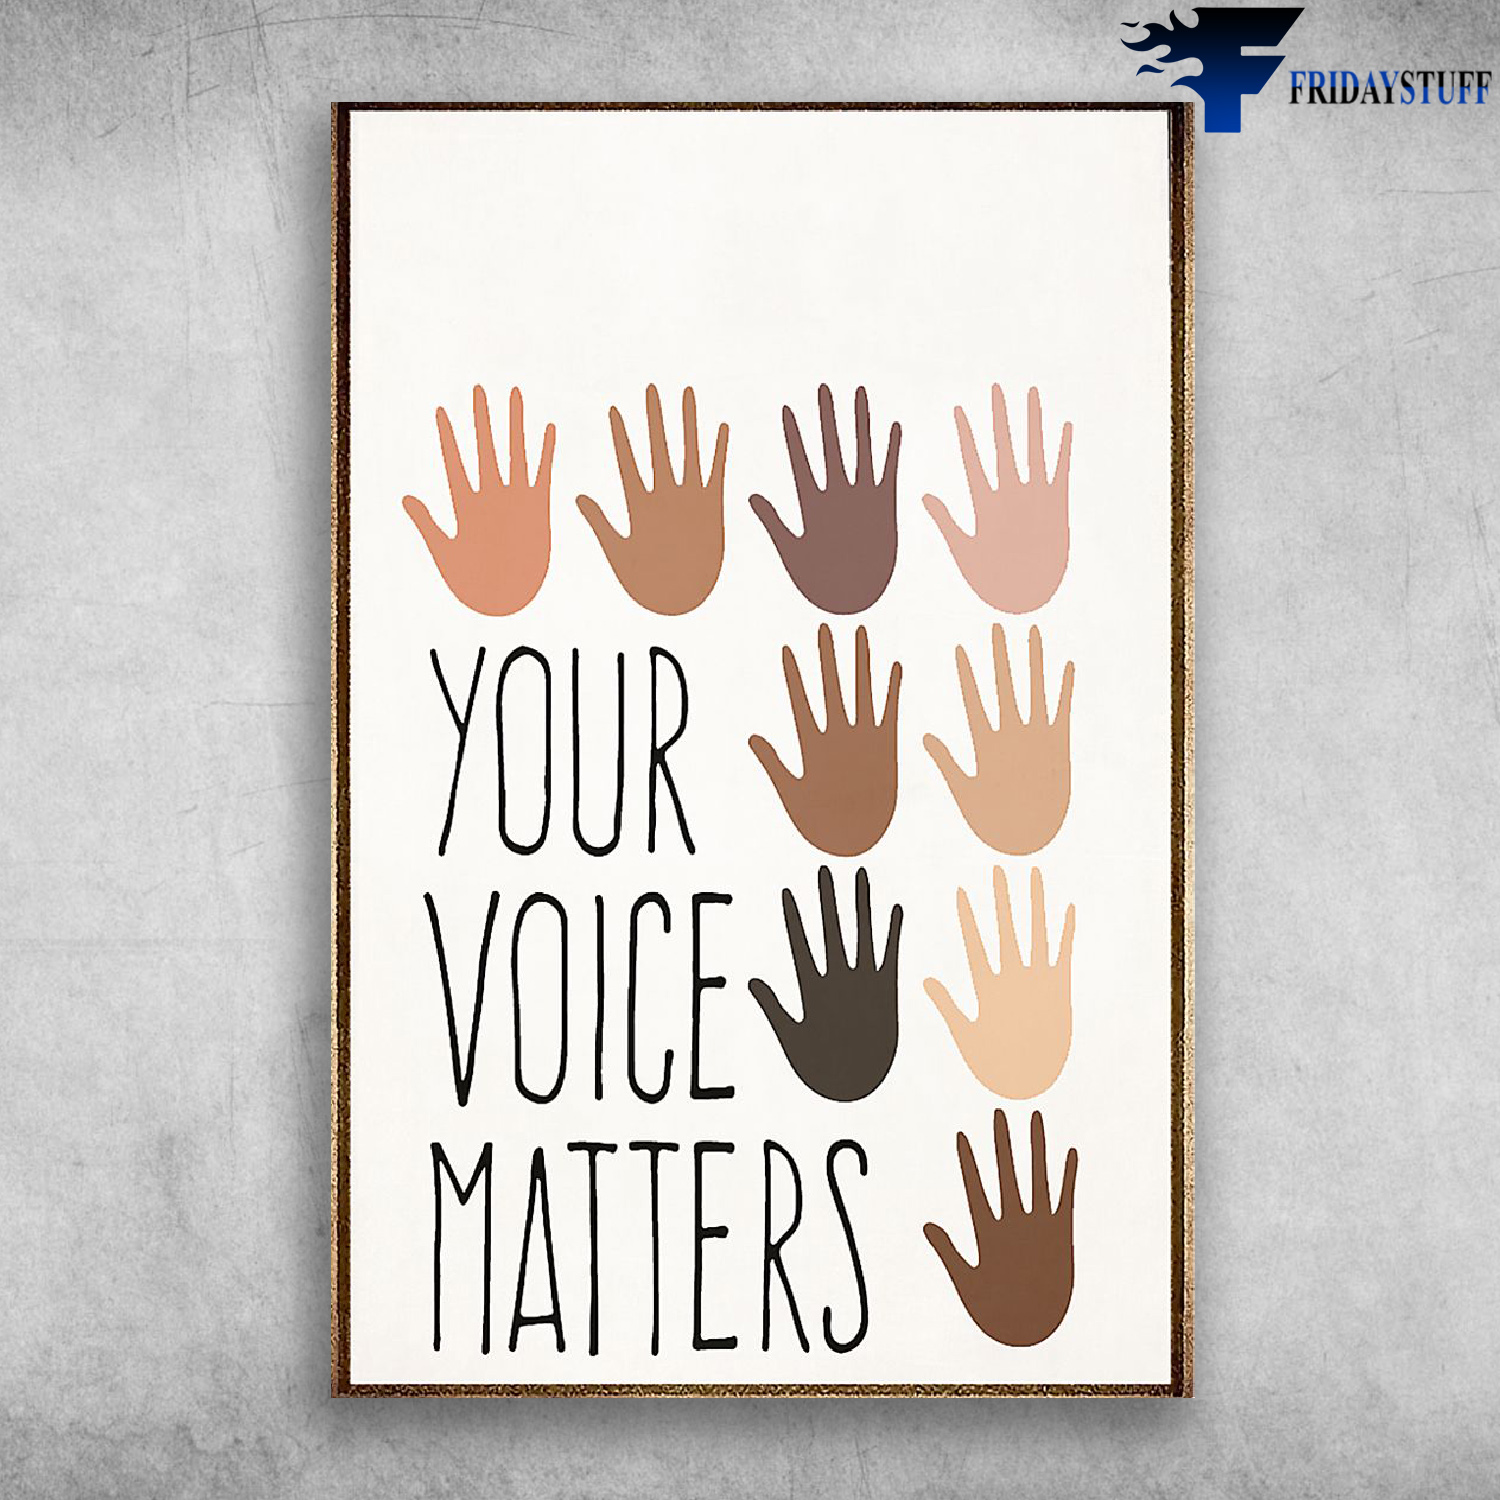 Your Voice Matters - Black Lives Matter - Black People